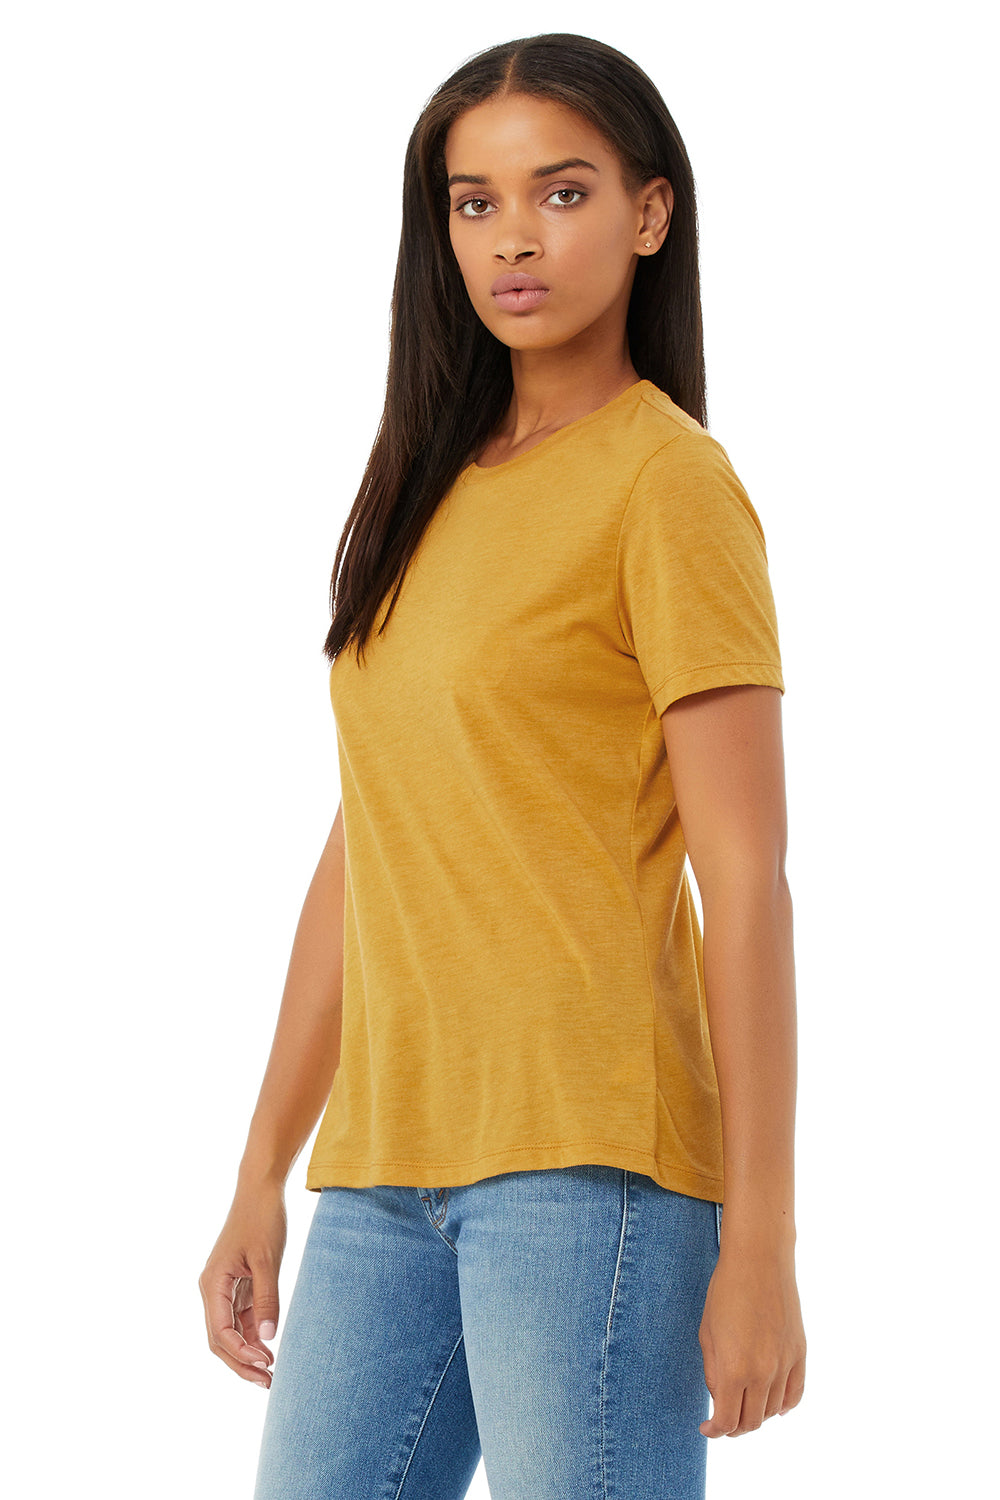 Bella + Canvas BC6413 Womens Short Sleeve Crewneck T-Shirt Mustard Yellow Model 3Q